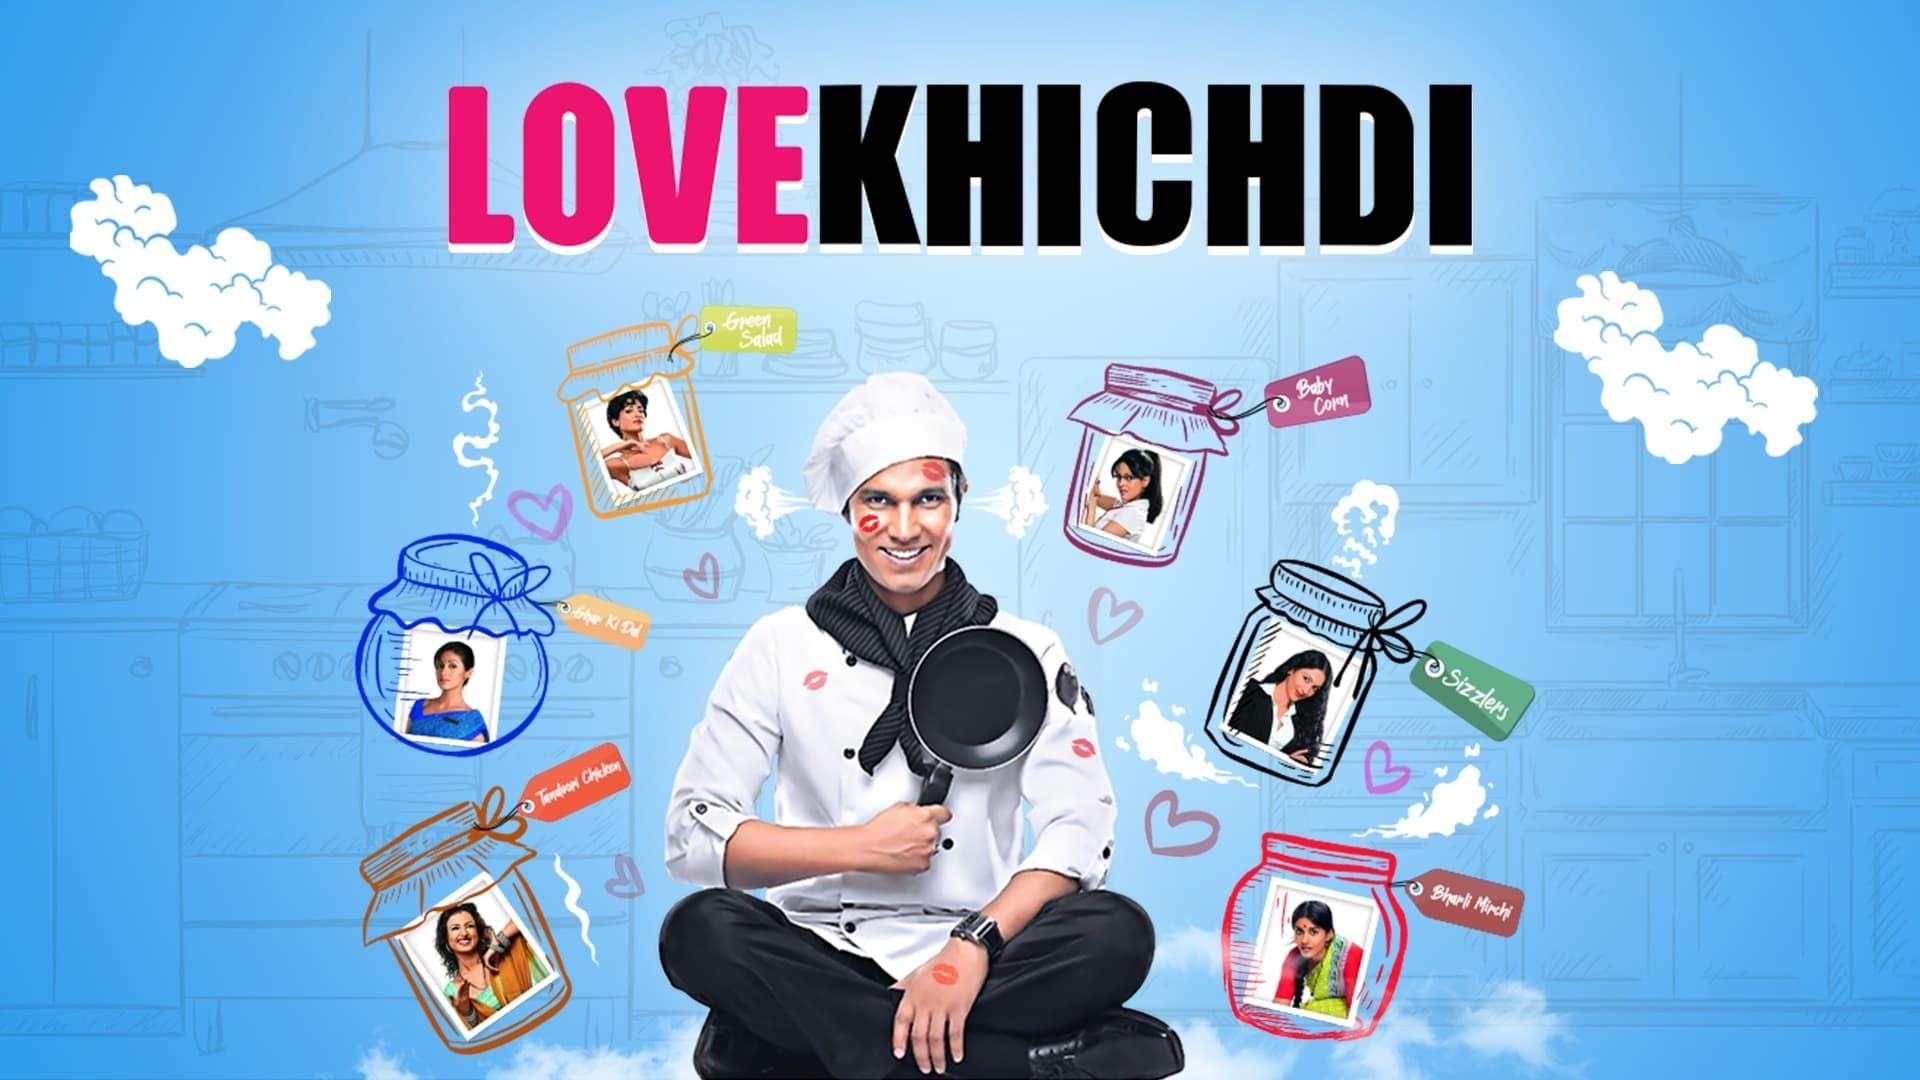 Love Khichdi background